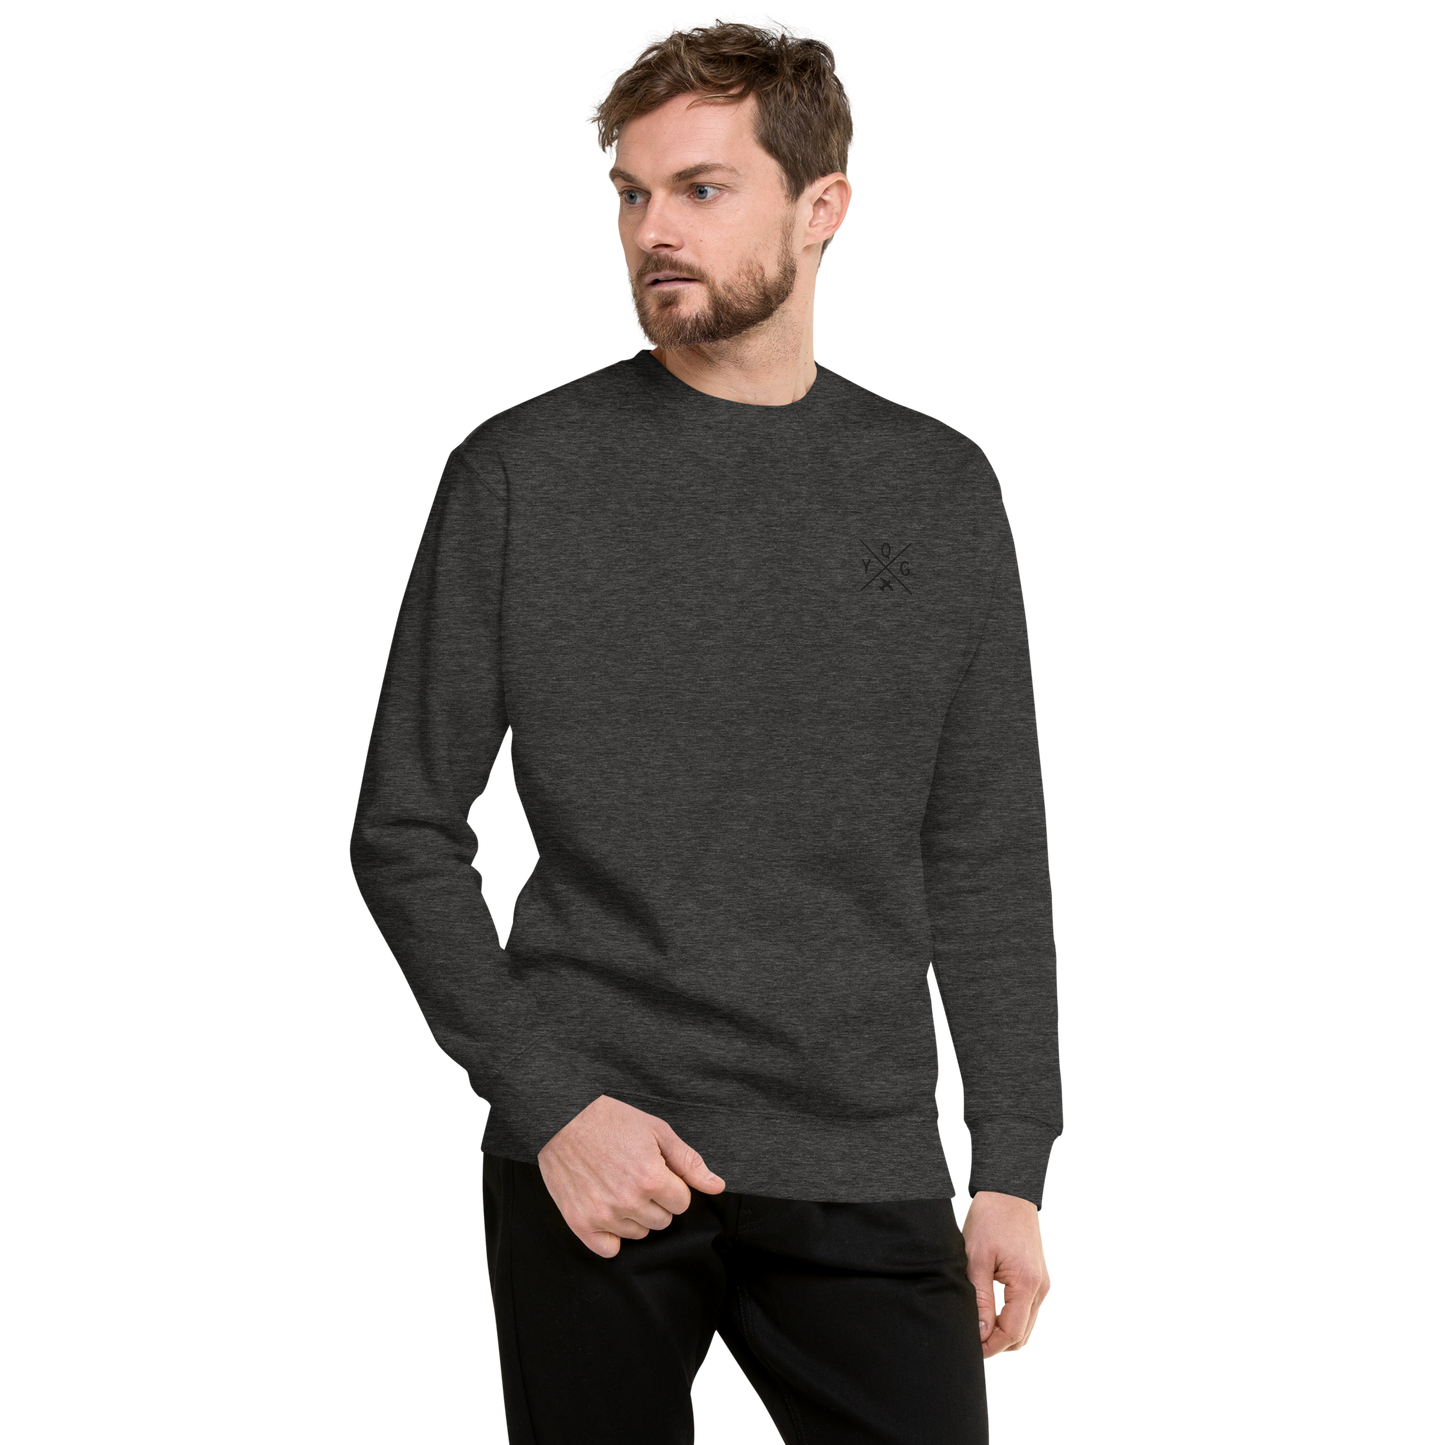 YHM Designs - YQG Windsor Premium Sweatshirt - Crossed-X Design with Airport Code and Vintage Propliner - Black Embroidery - Image 08